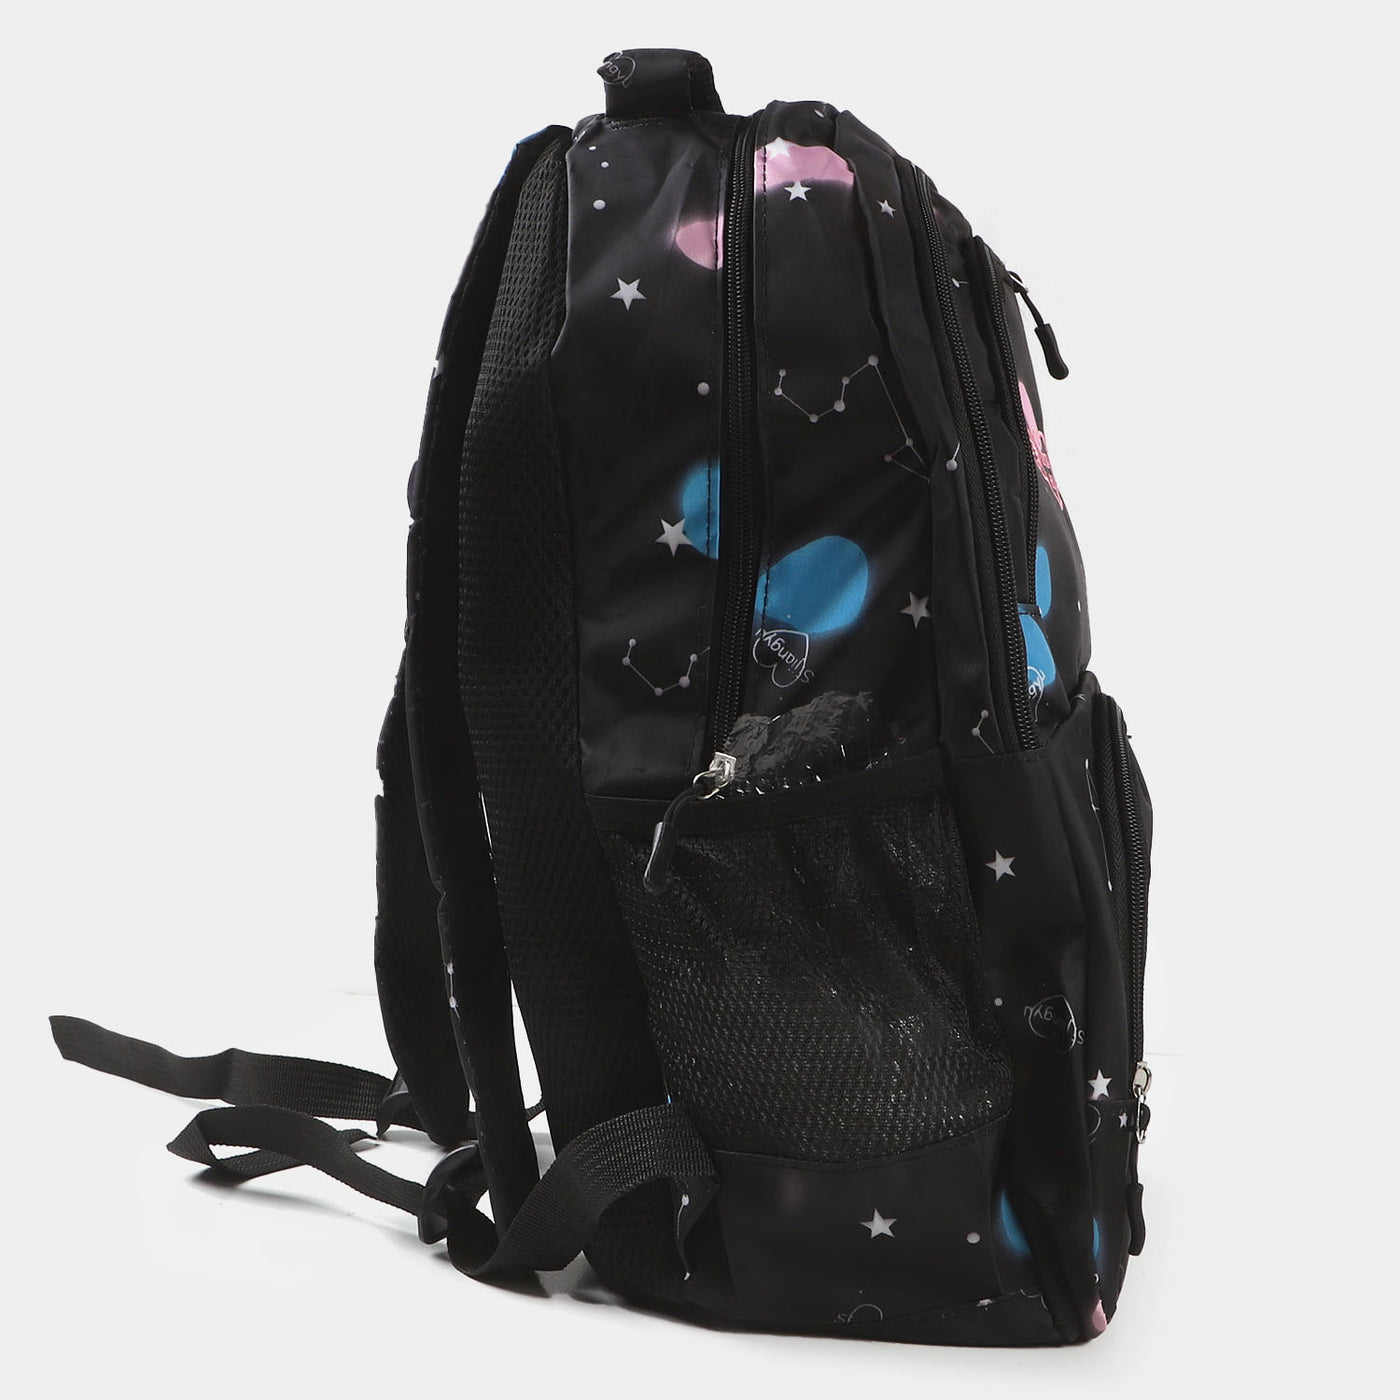 Students Backpack/Travel/School Bag For Kids